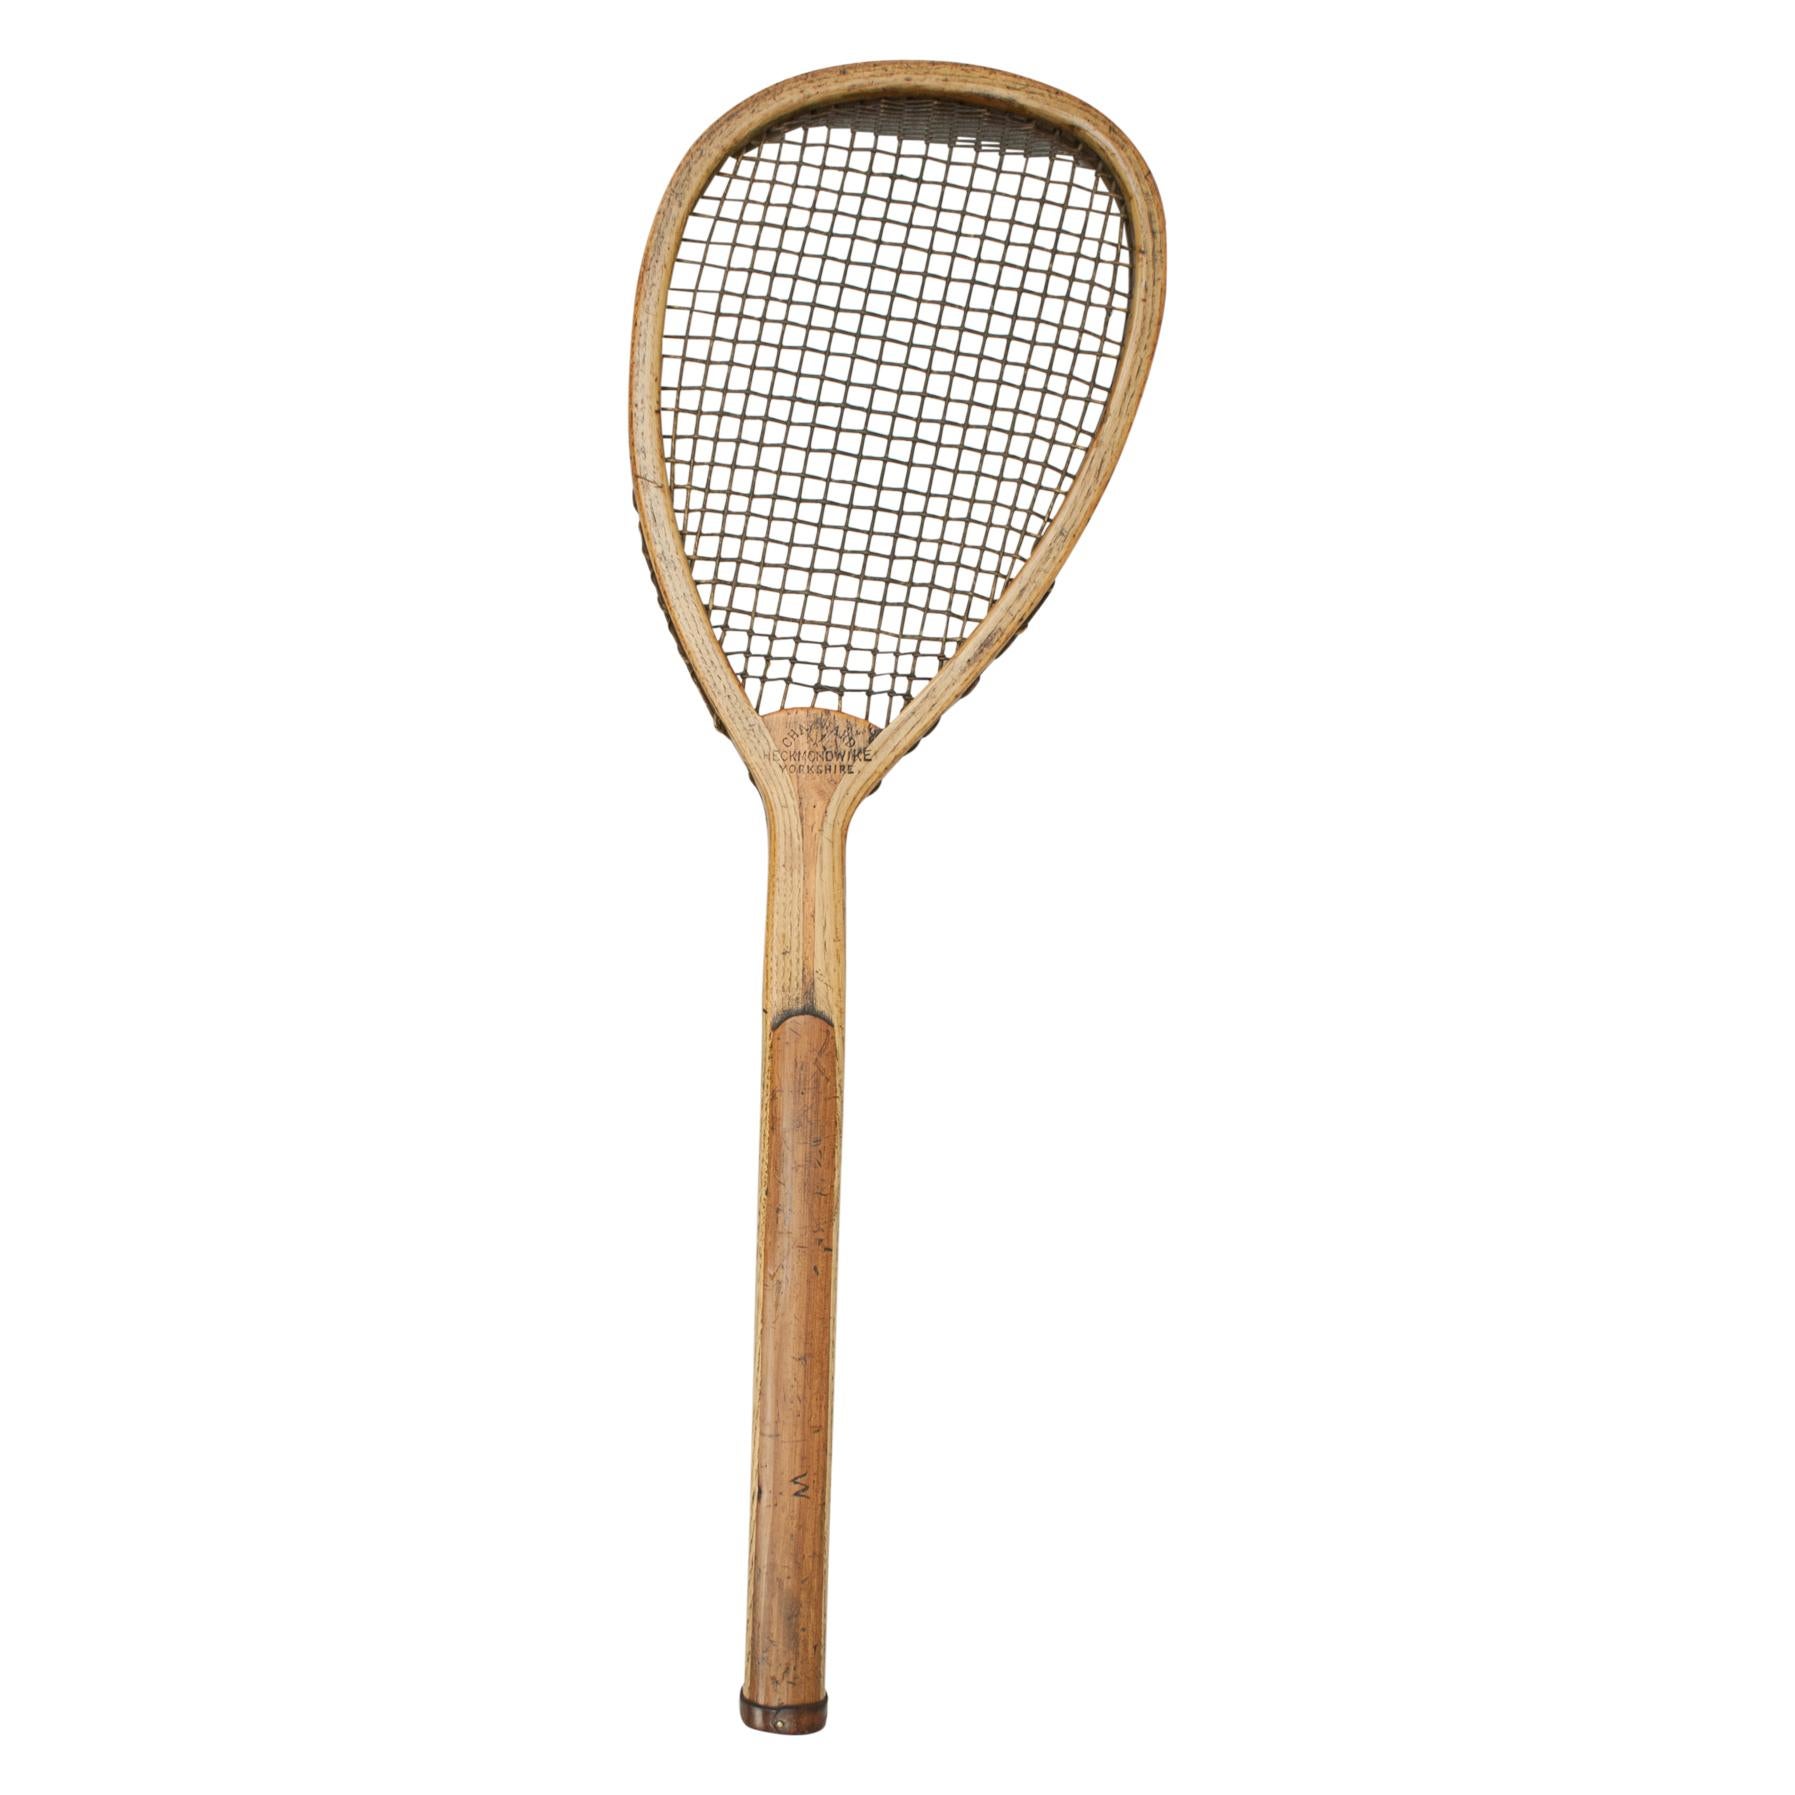 Charles Ward Lawn Tennis Racket